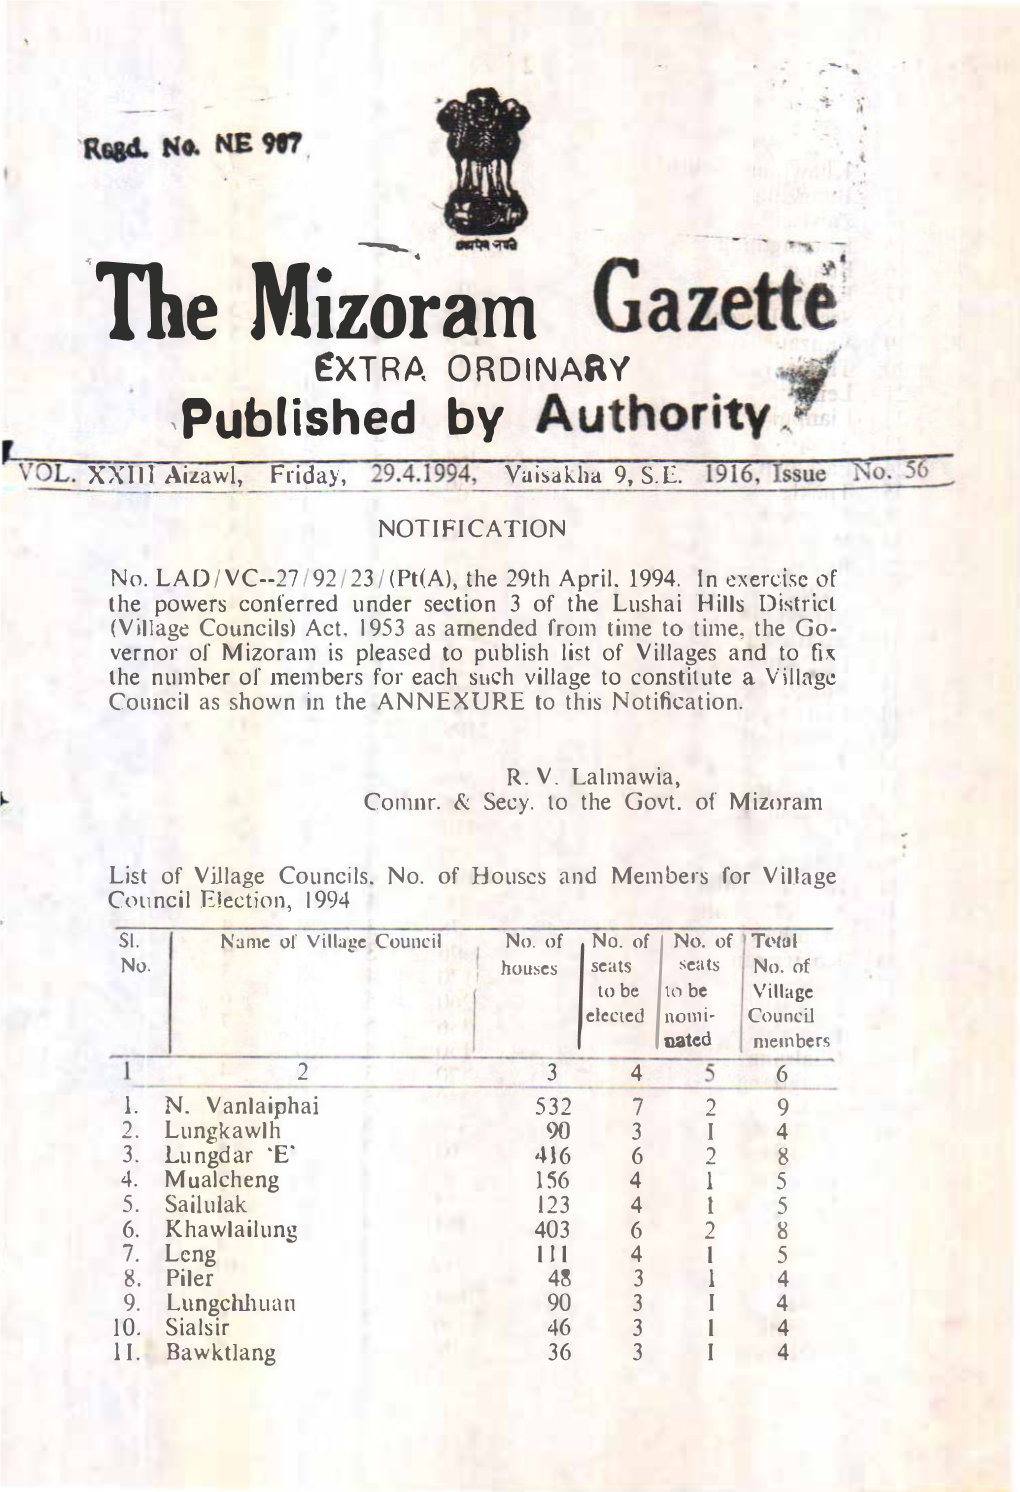 'The Mizoram £XTR.A